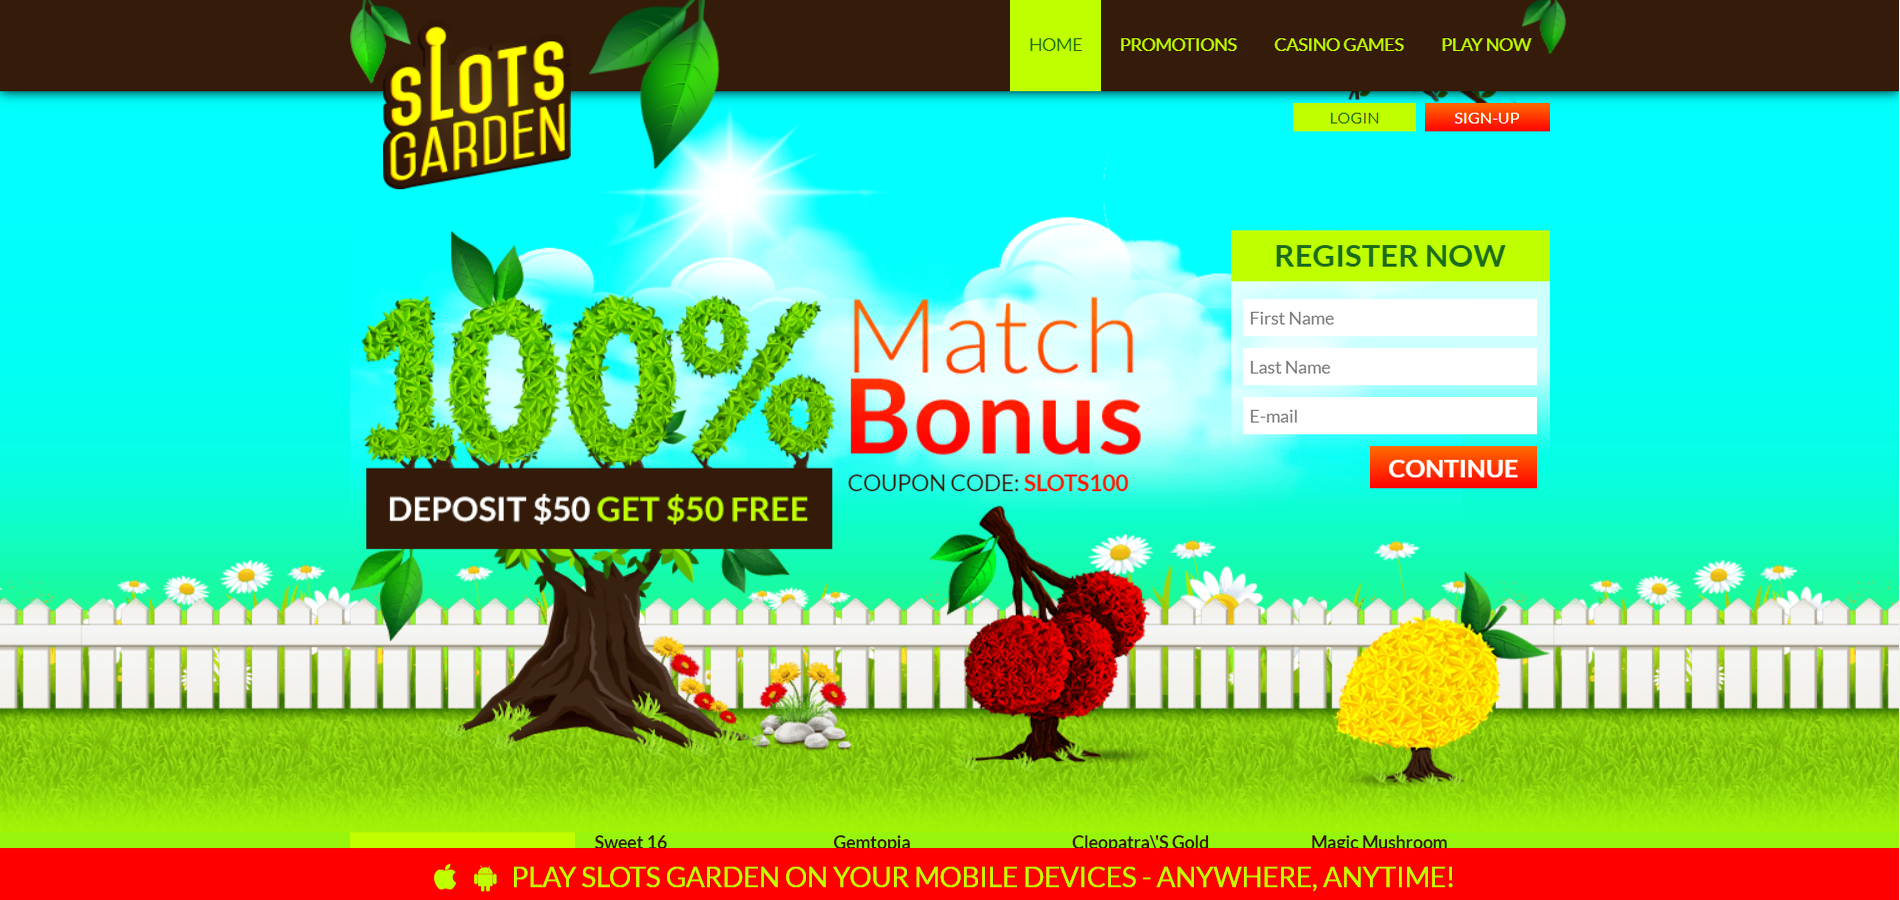 the homepage of Slots Garden Casino